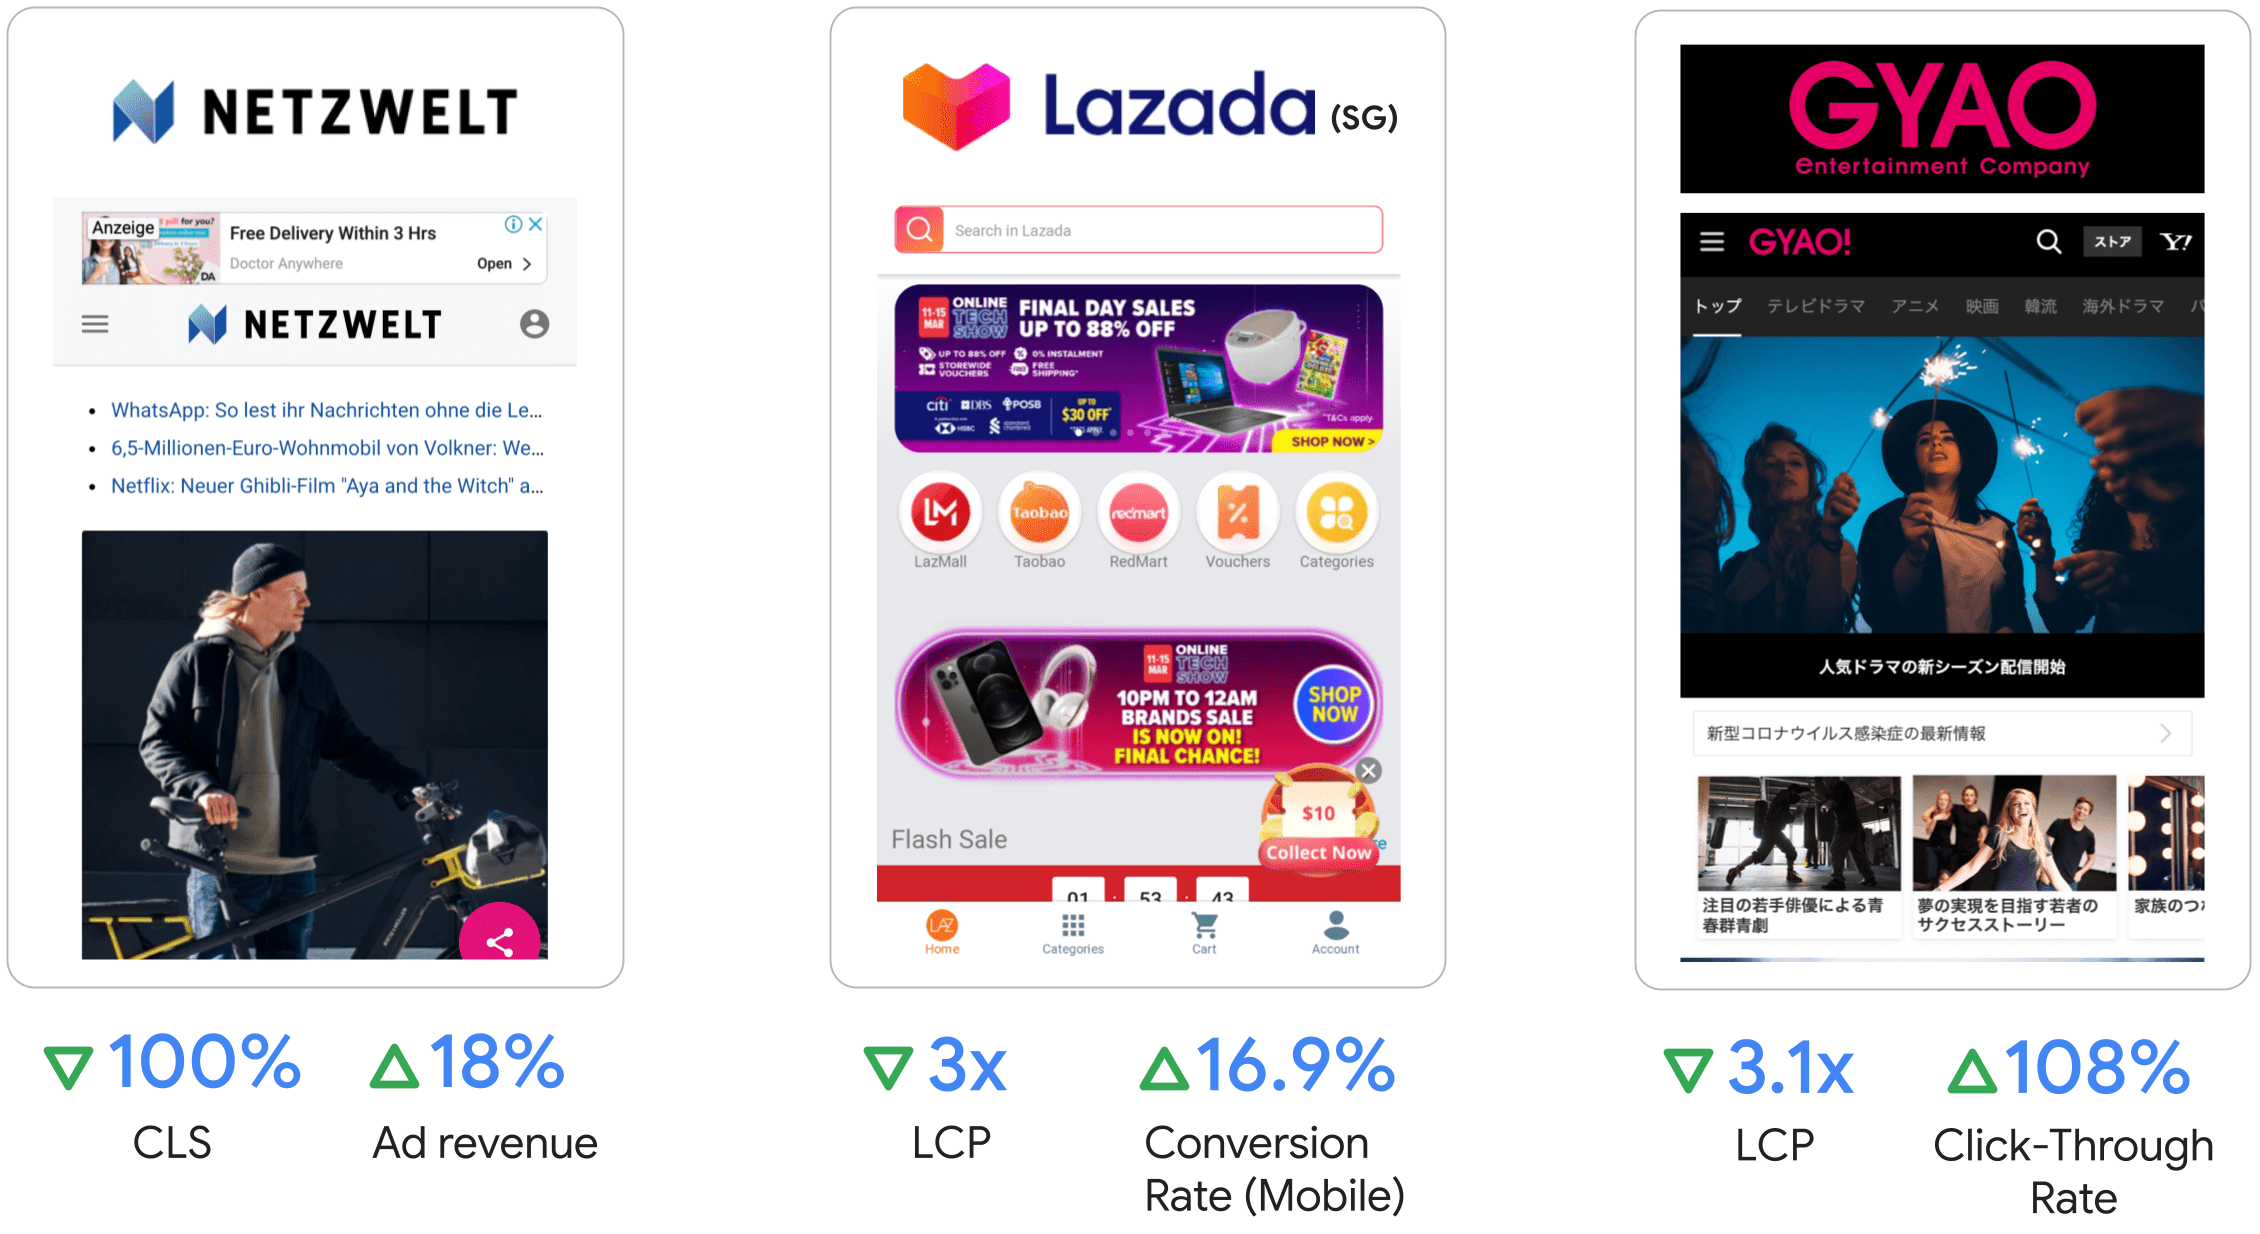 Netzwelt 的广告收入提高了 18%，Lazada 的 LCP 提高了 3 倍，移动设备上的转化率提高了 16.9%，GYAO 的 LCP 提高了 3.1 倍，点击率提高了 108%